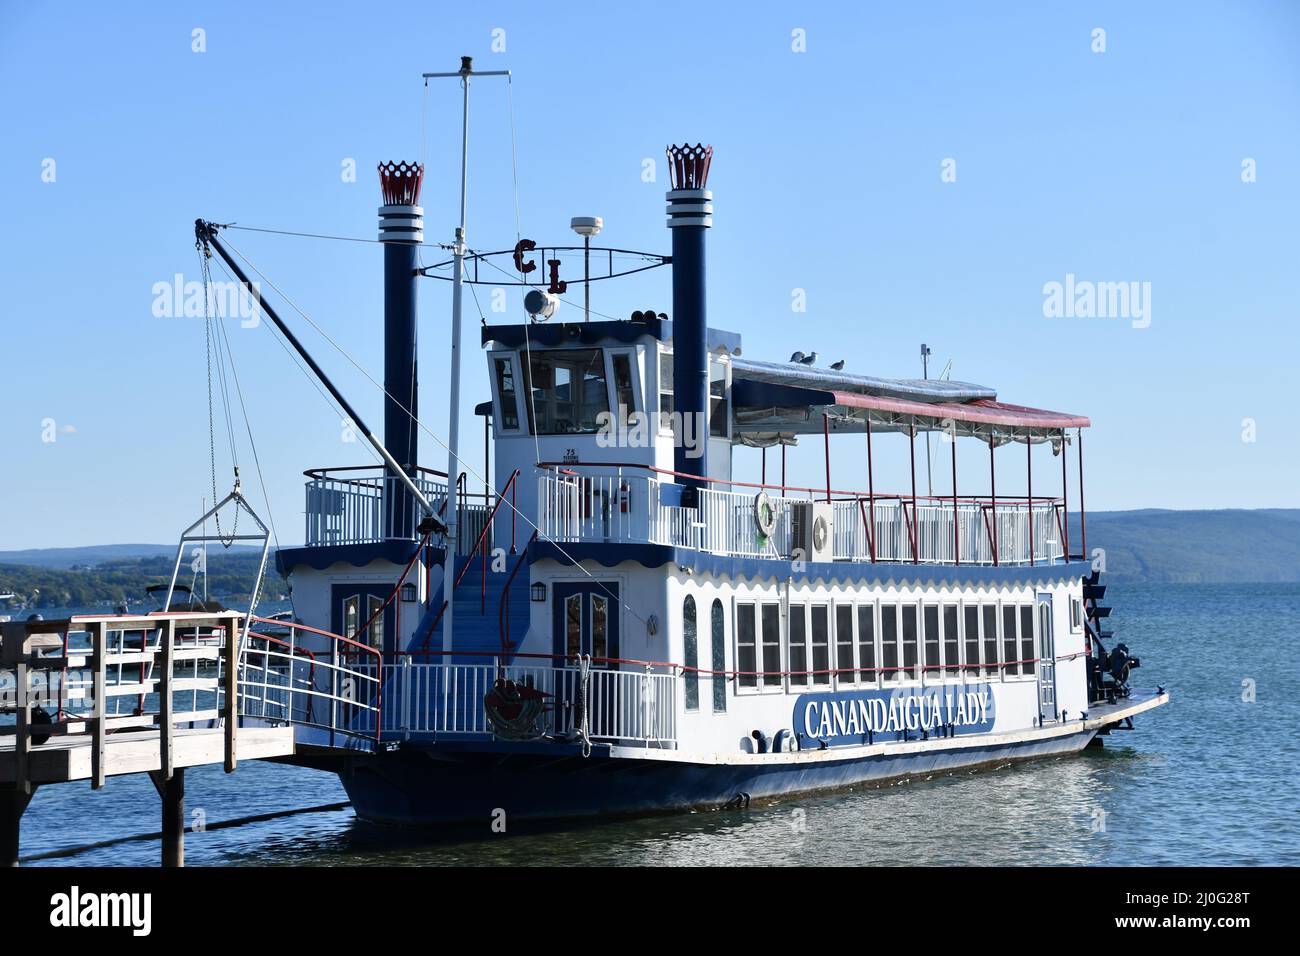 Die Canandaigua Lady Kreuzfahrt Boot auf Canandaigua See im Staat New York Stockfoto